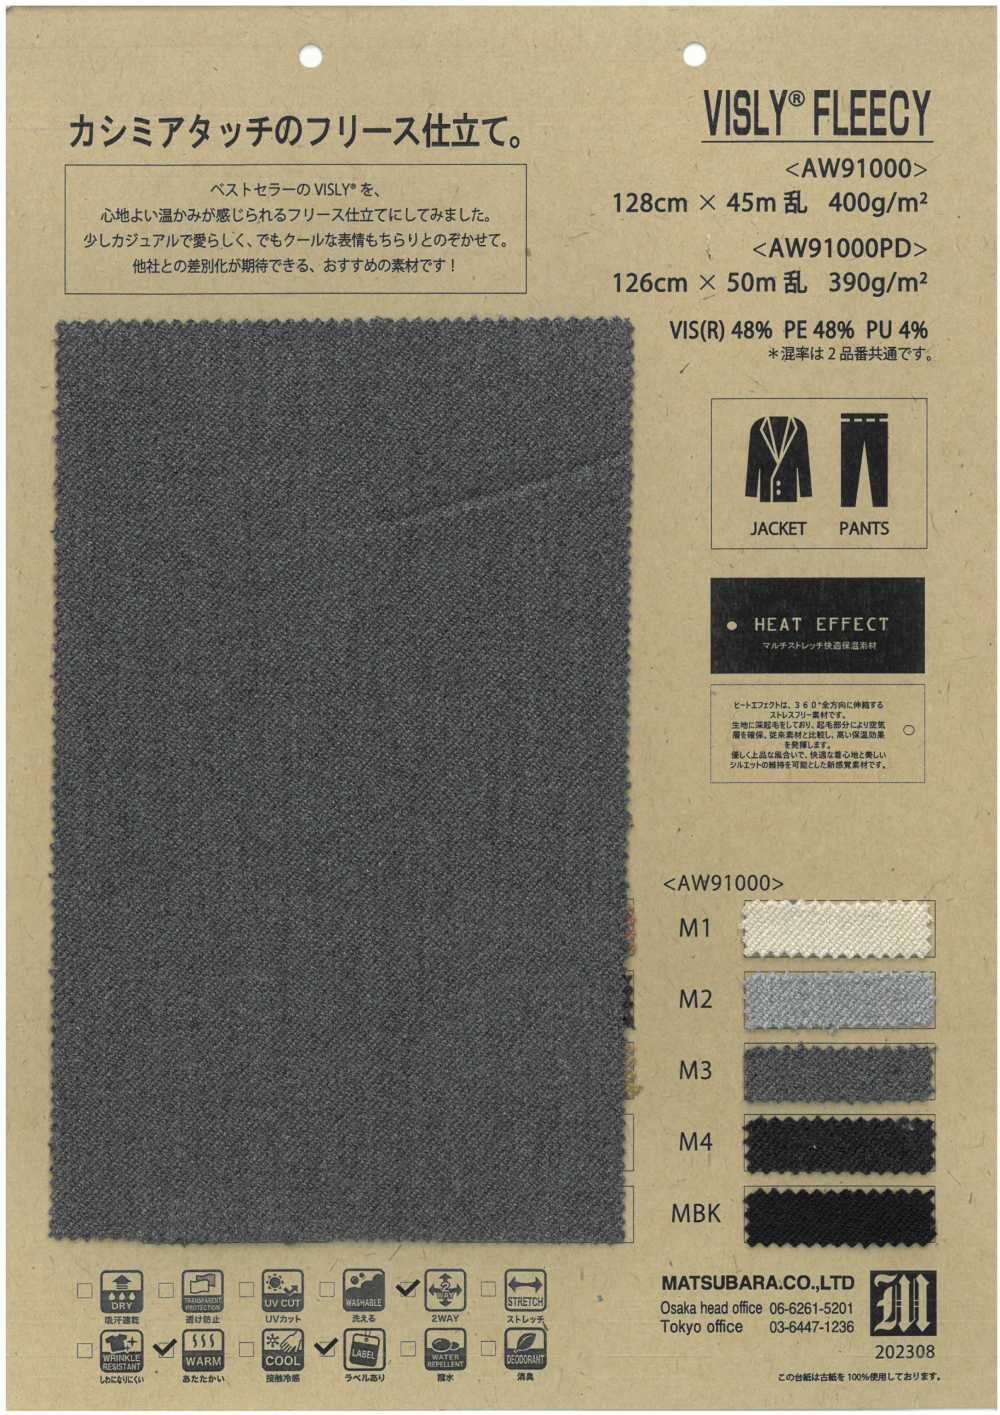 AW91000PD VISLY®️FLEECY[Textile / Fabric] Matsubara